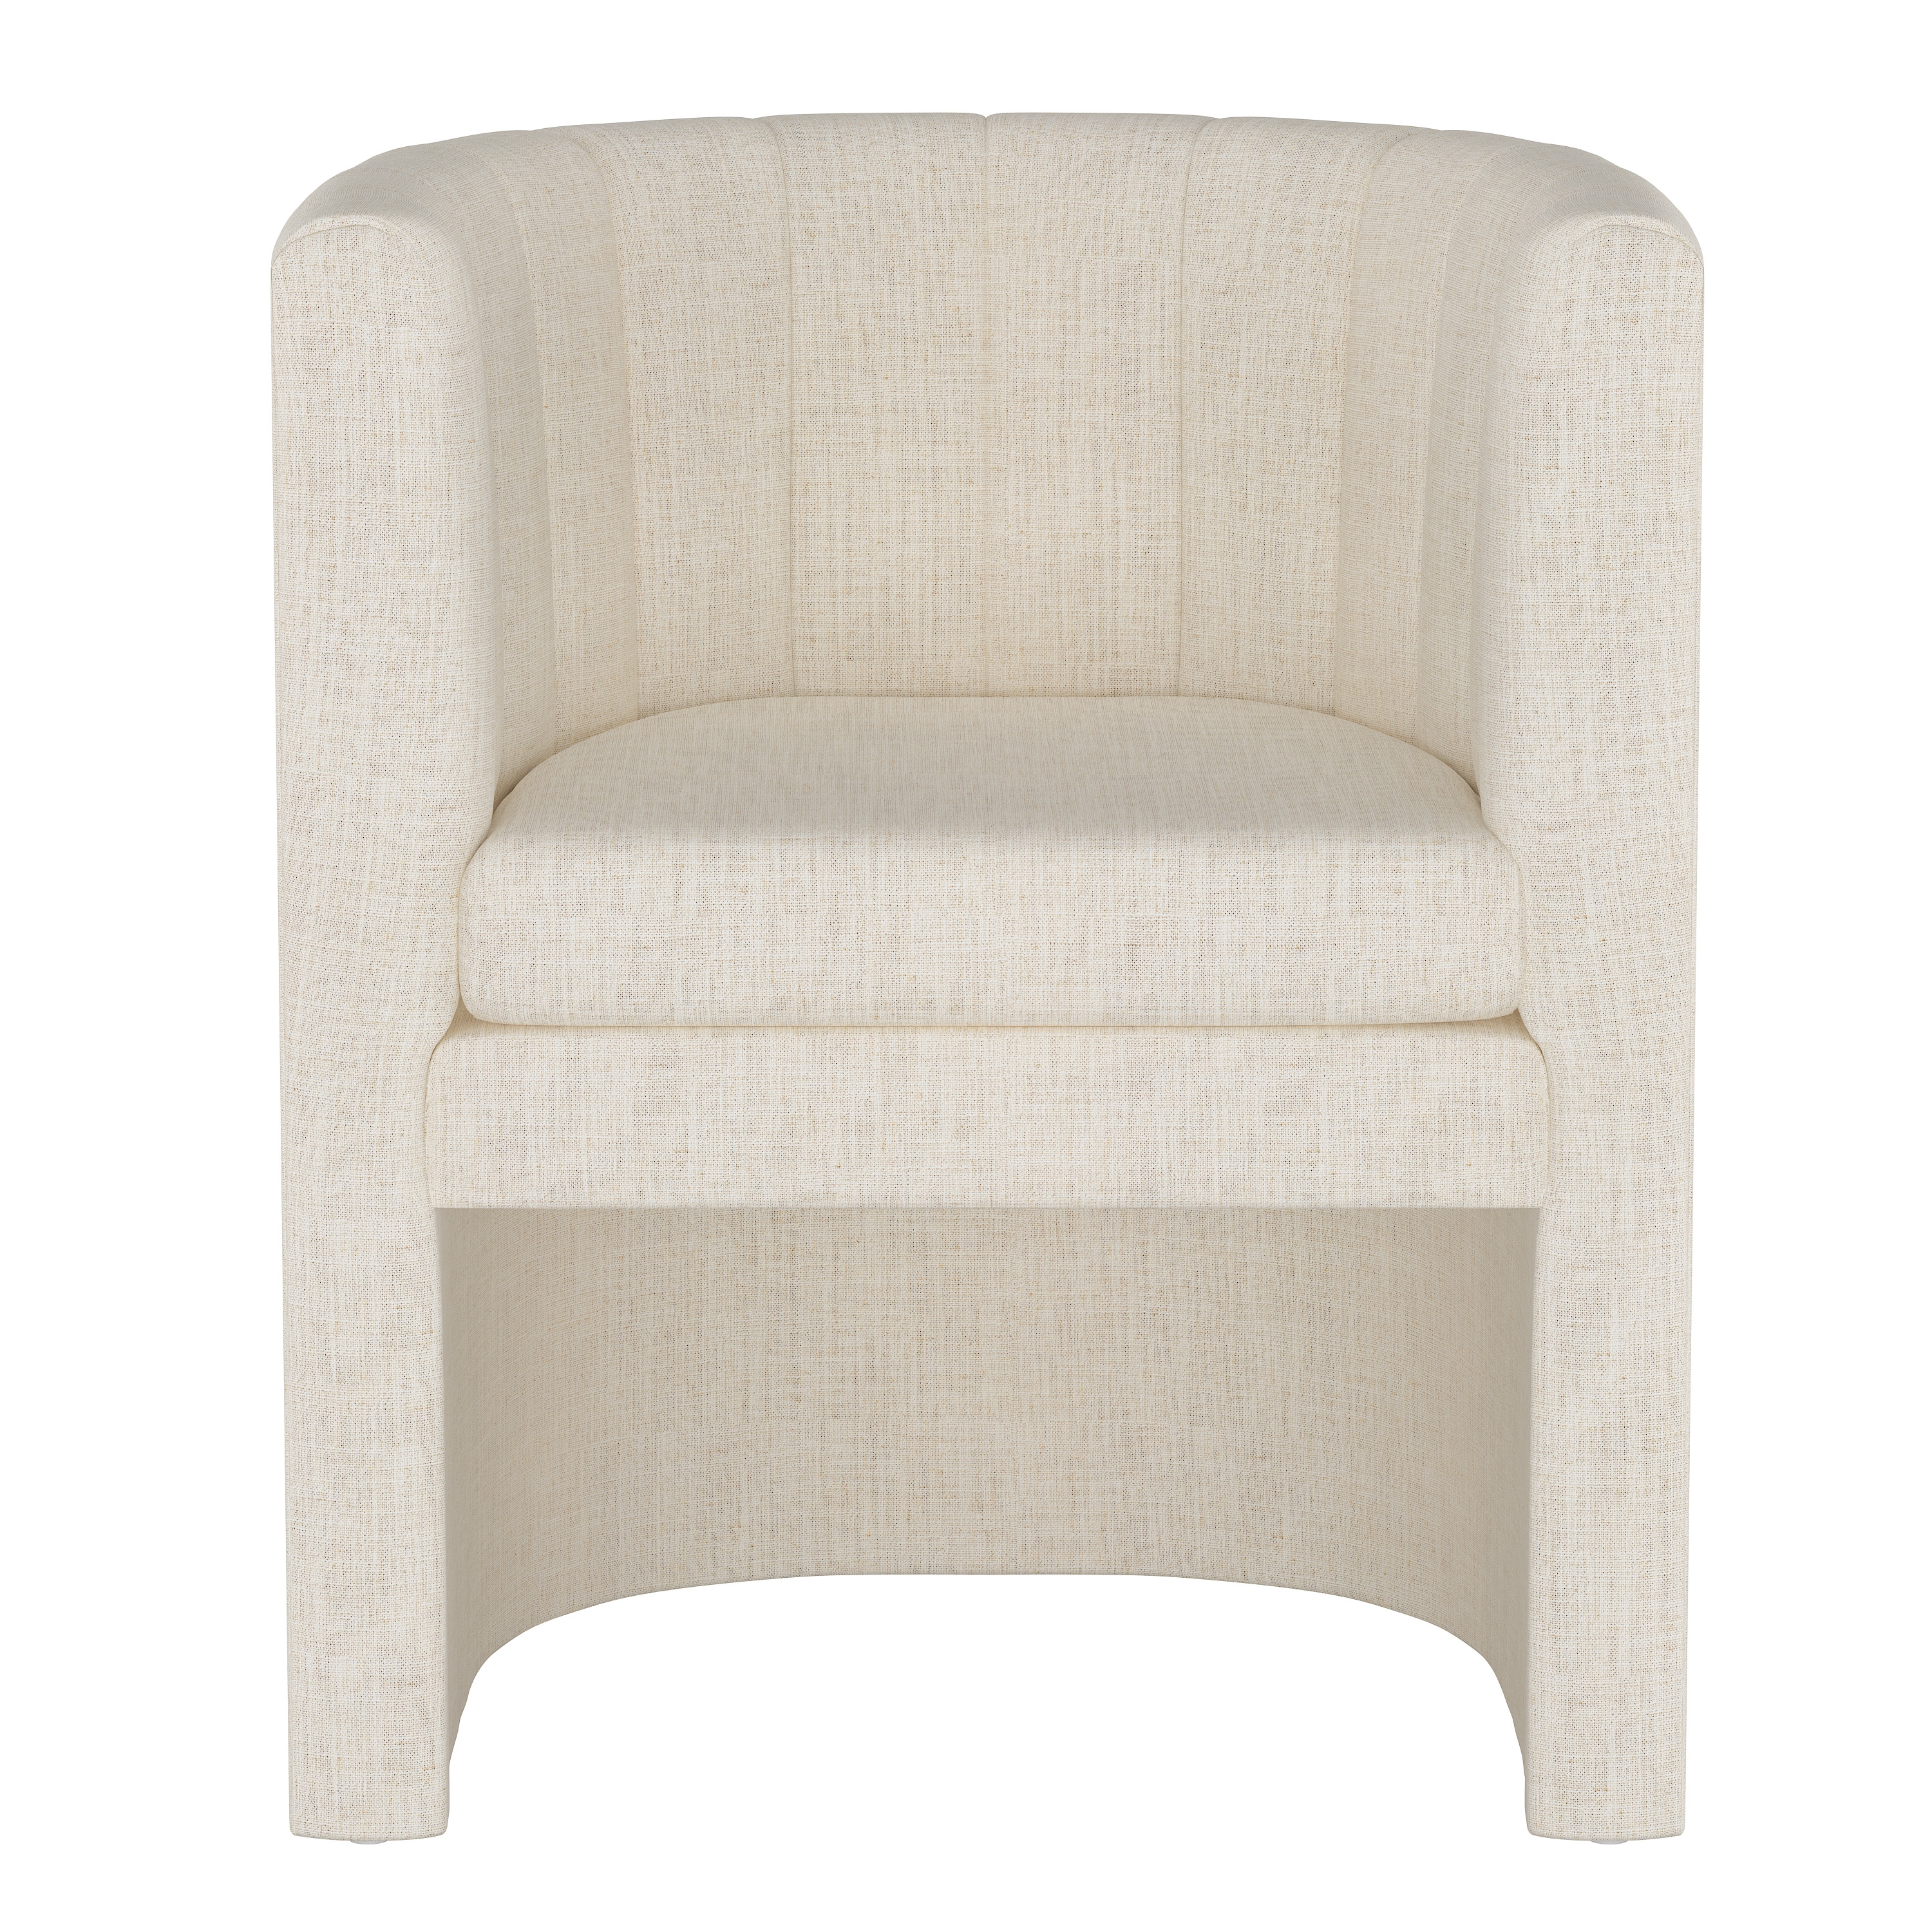 Wellshire Chair, Talc Linen - Image 1